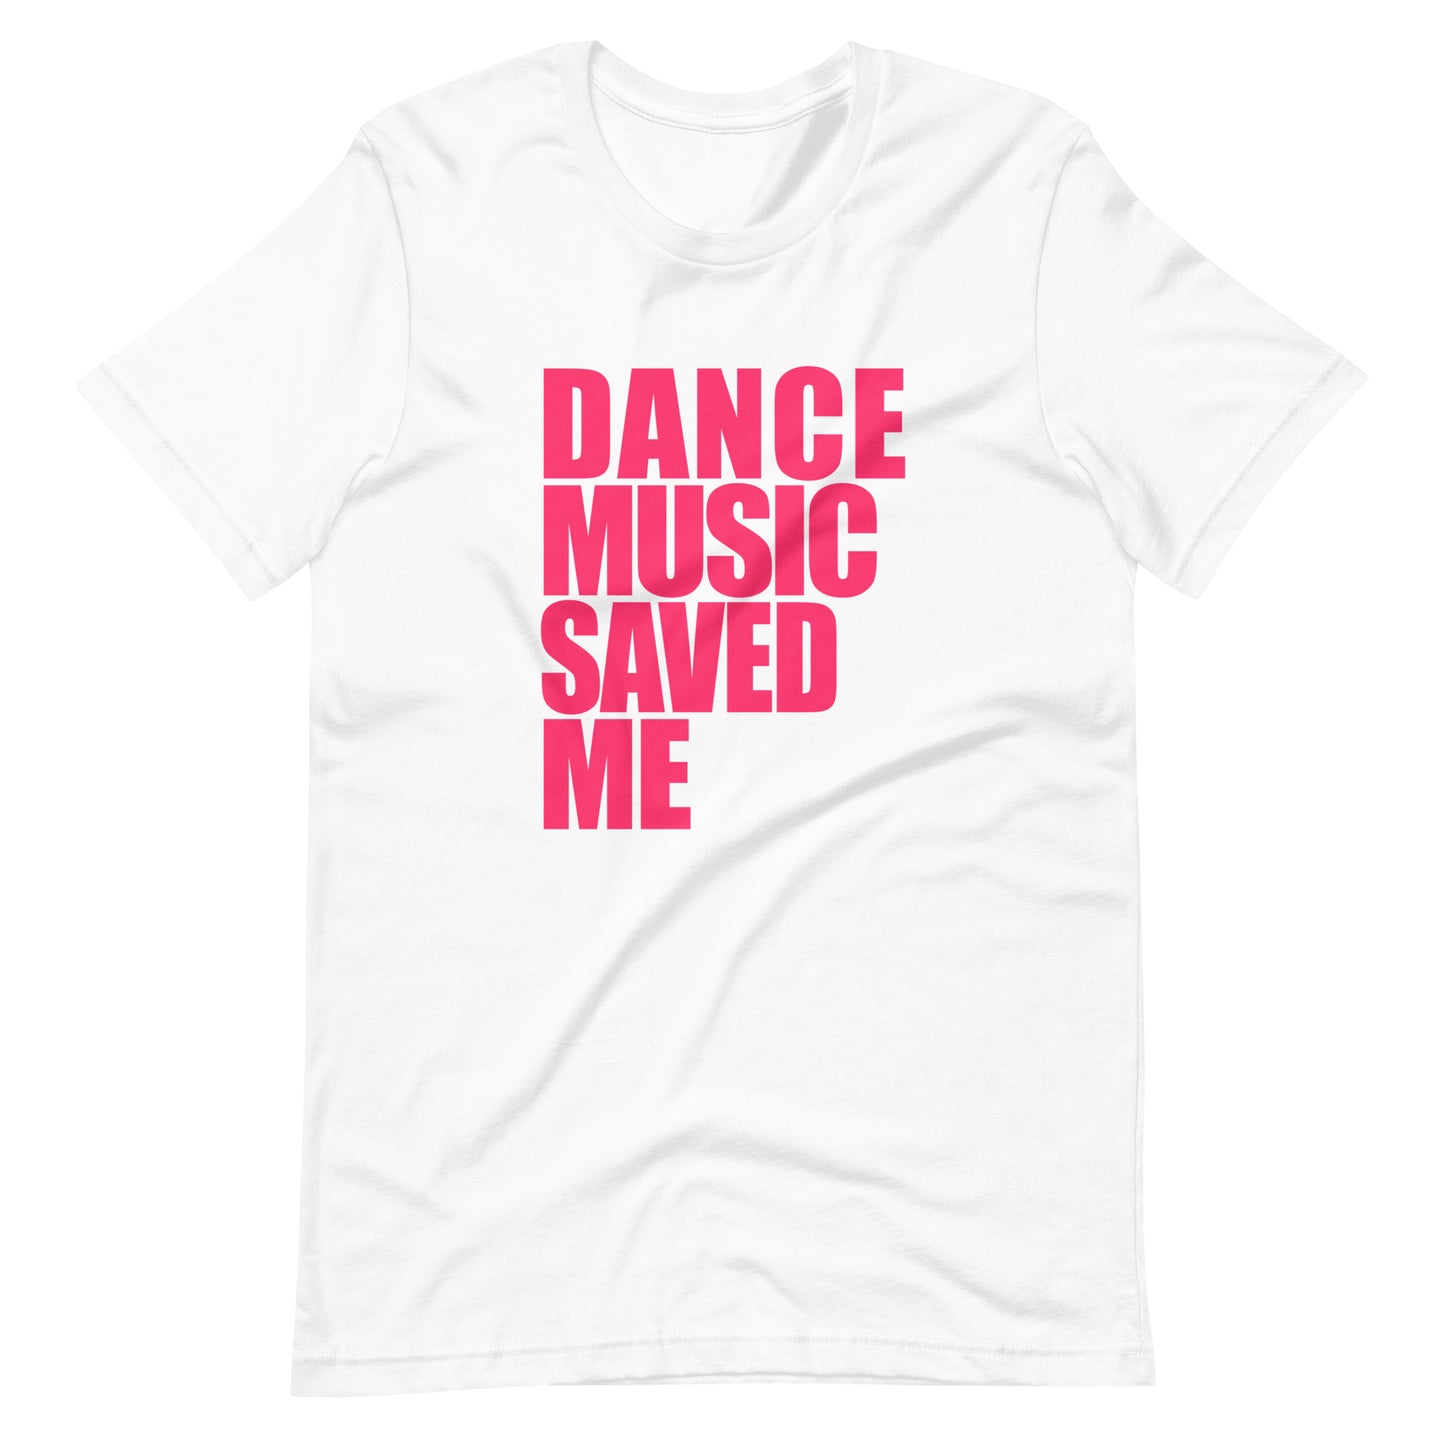 DANCE MUSIC SAVED ME - T-shirt